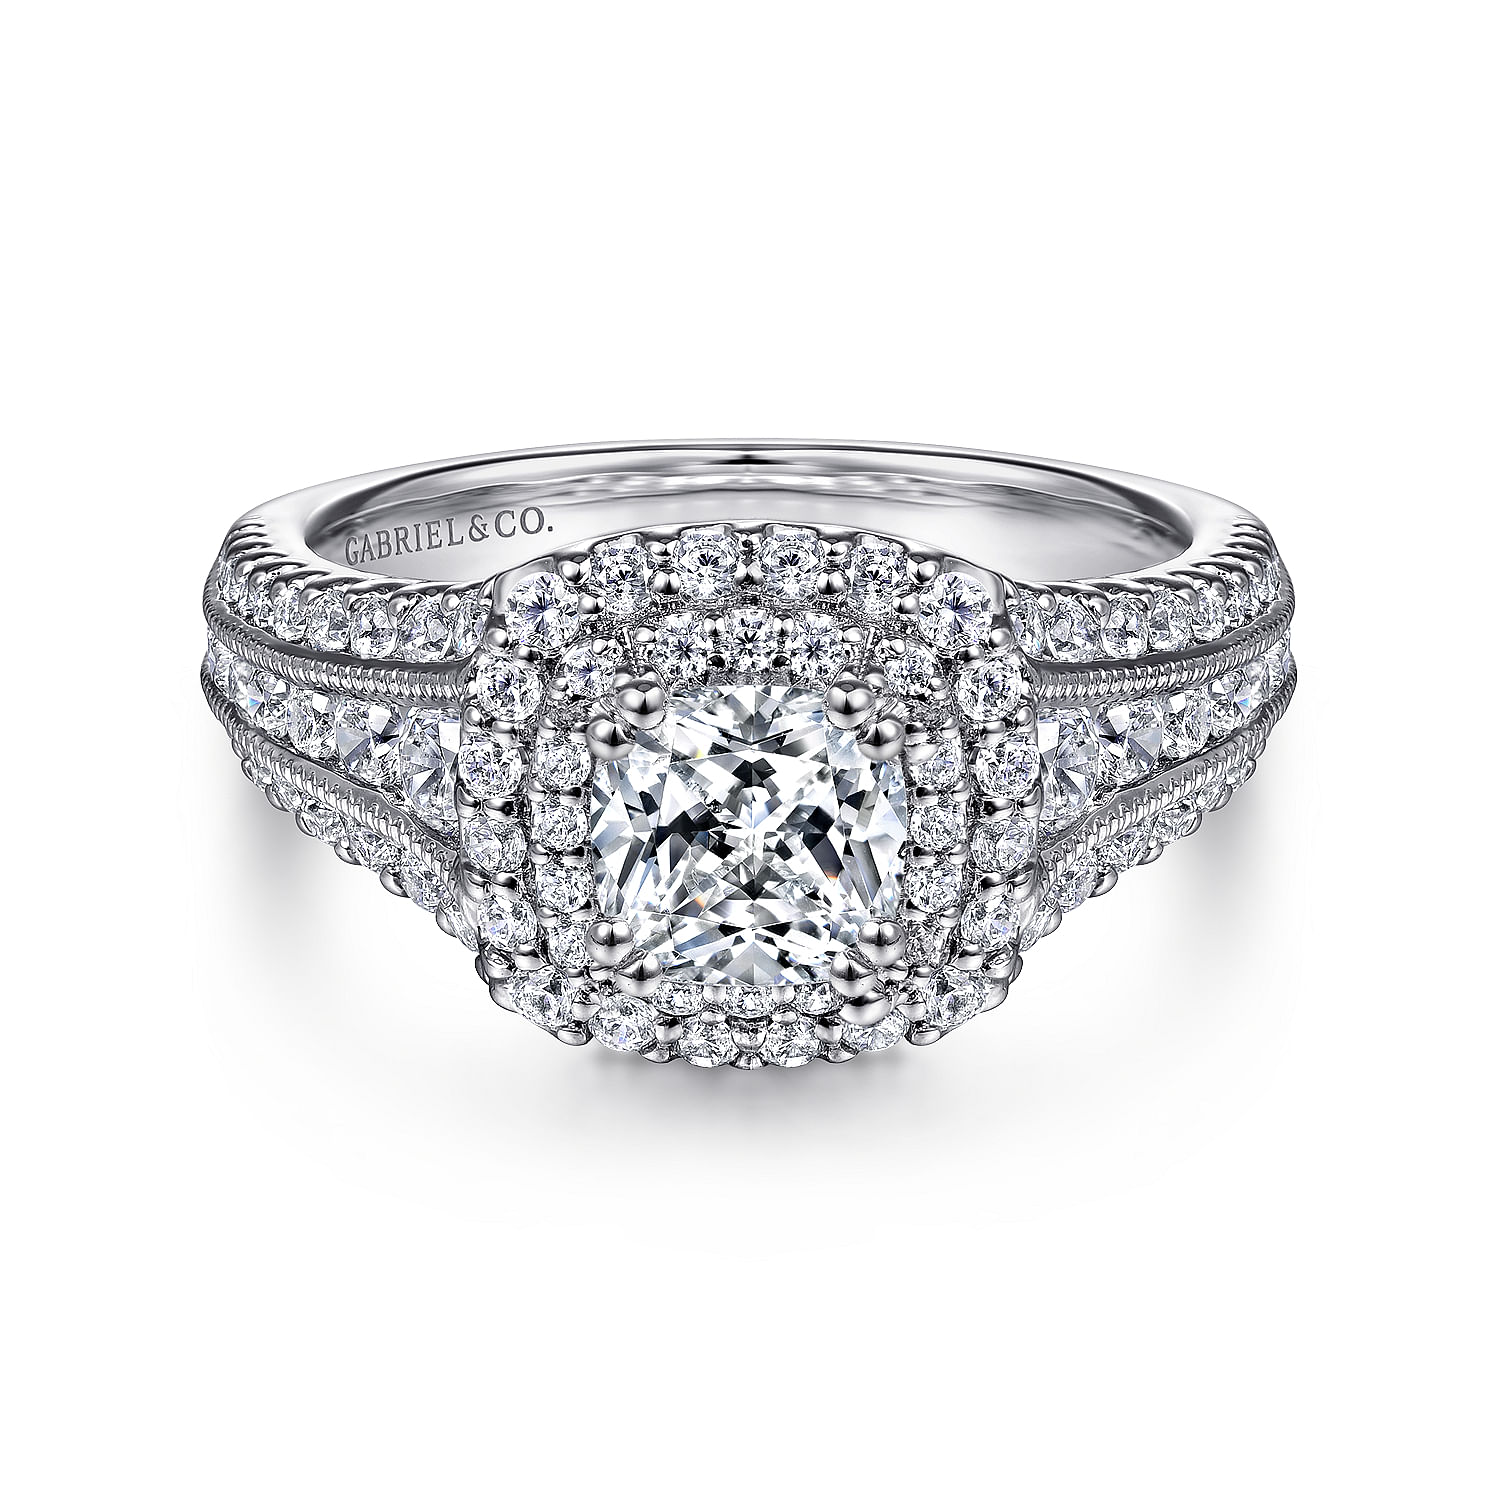 Cushion Cut Engagement Rings | Iconic rings - Gabriel & Co.